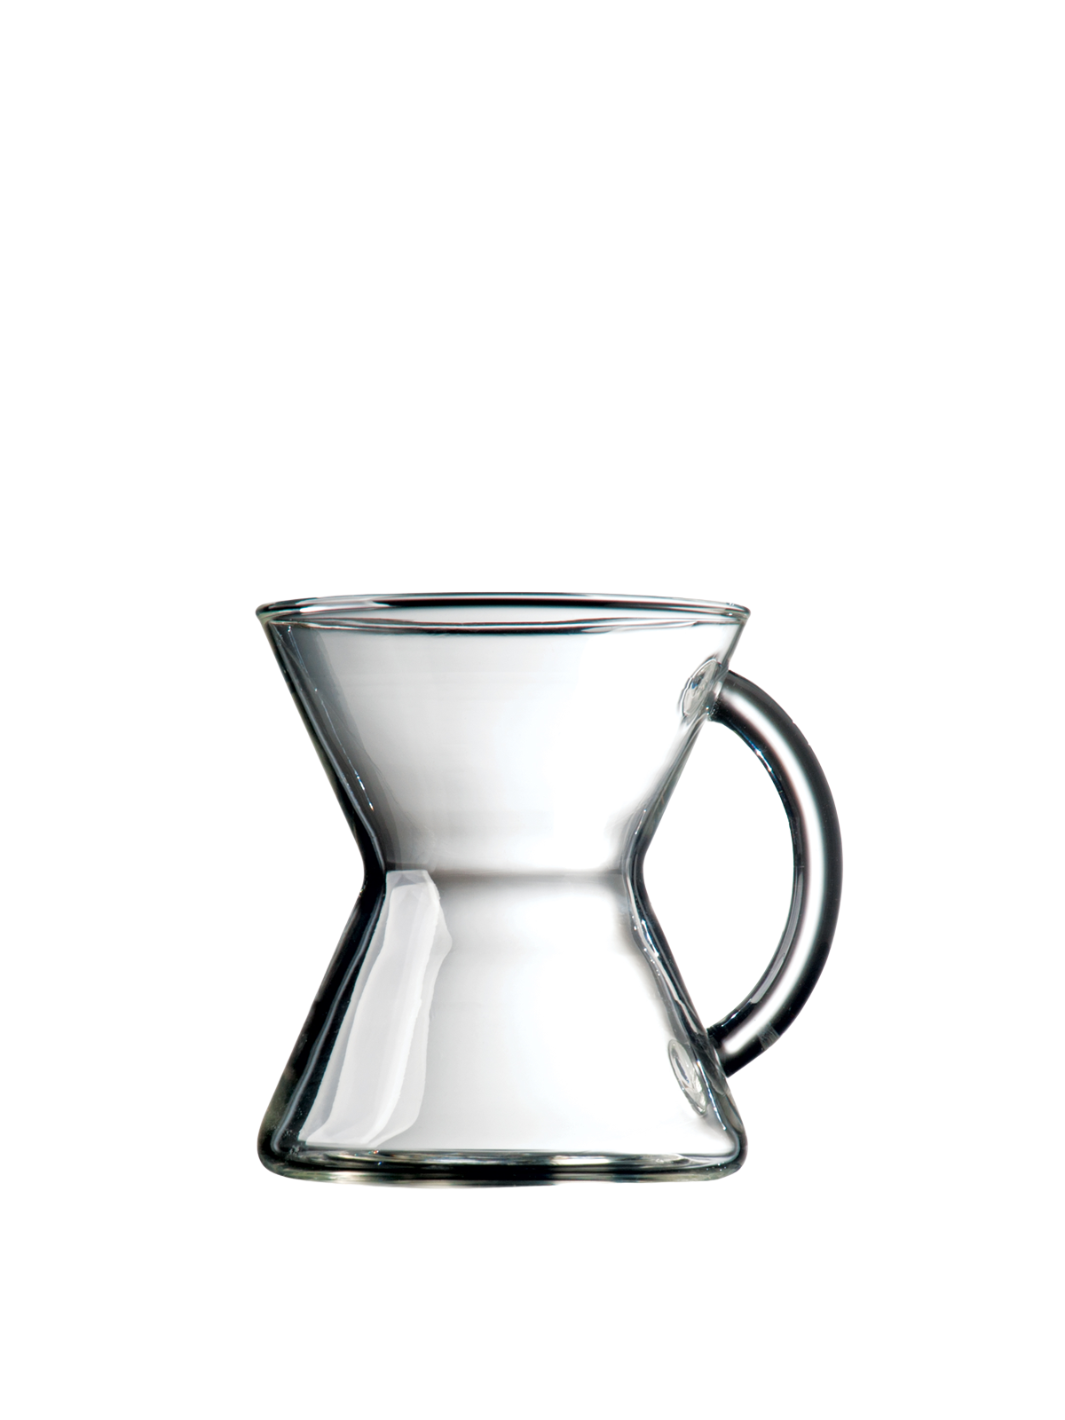 CHEMEX® Glass Mug – Someware